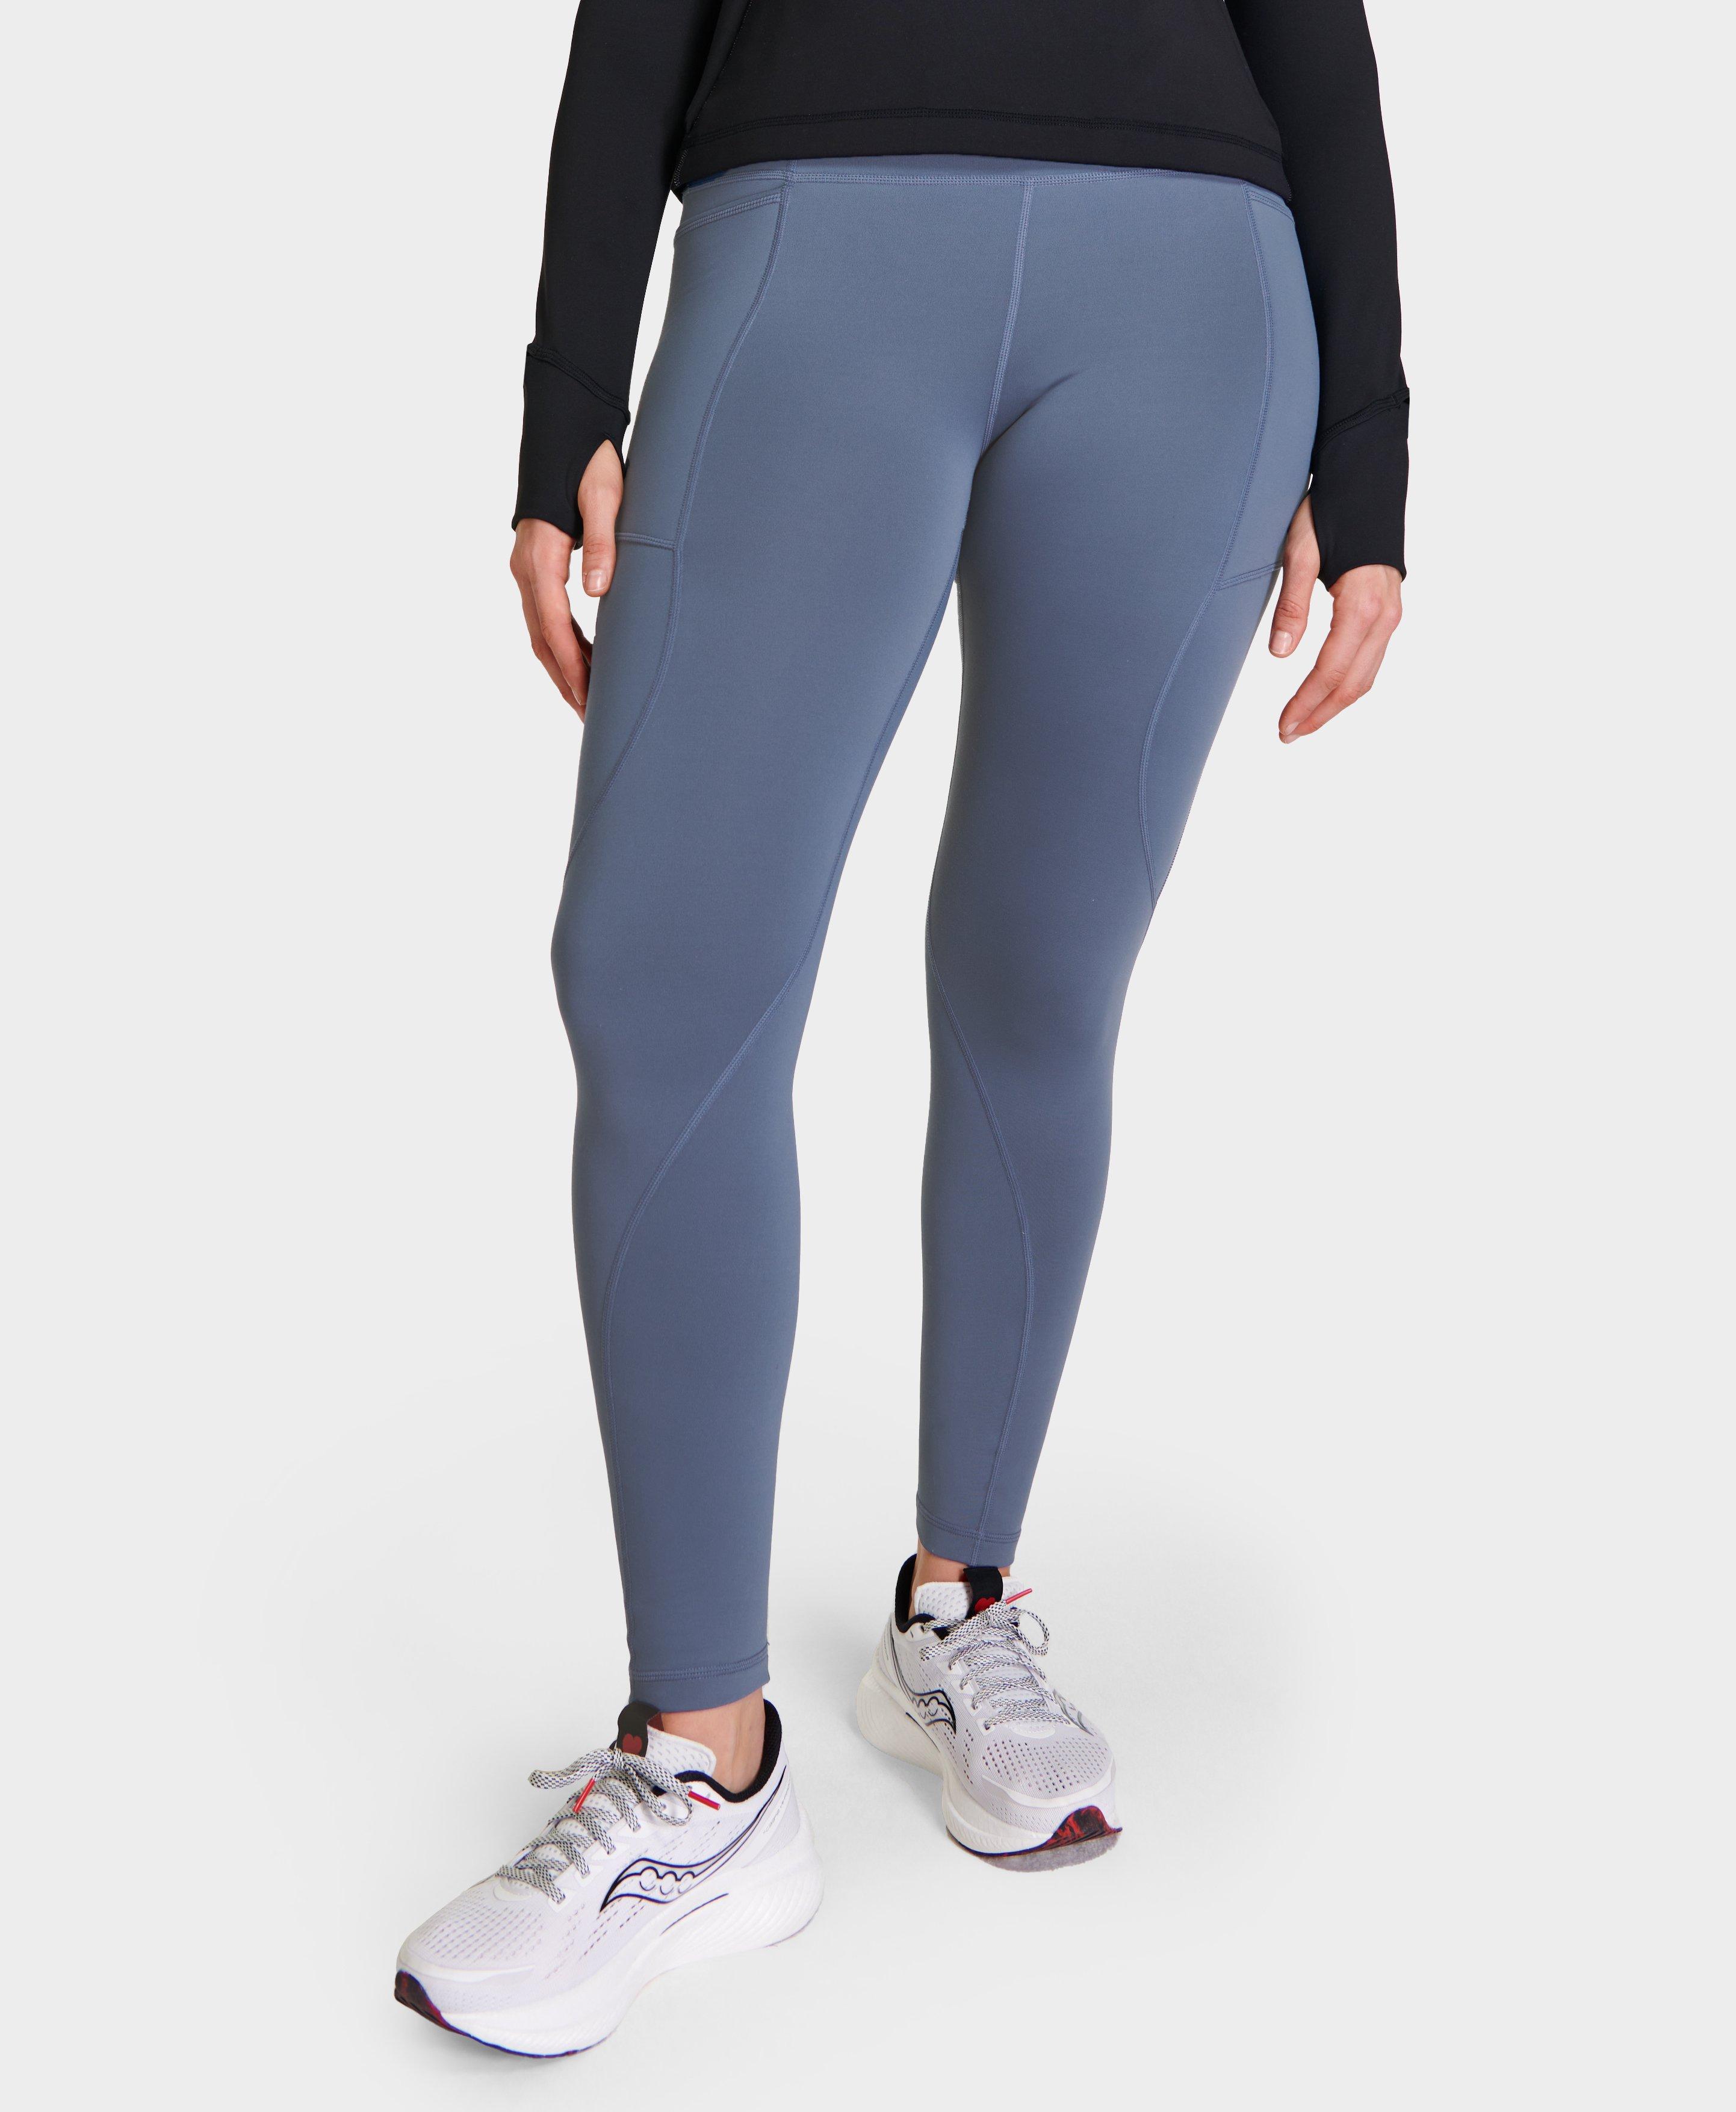 Therma Boost 2.0 7/8 Reflective Running Leggings - Grey SB Dot Reflective  Print, Women's Leggings